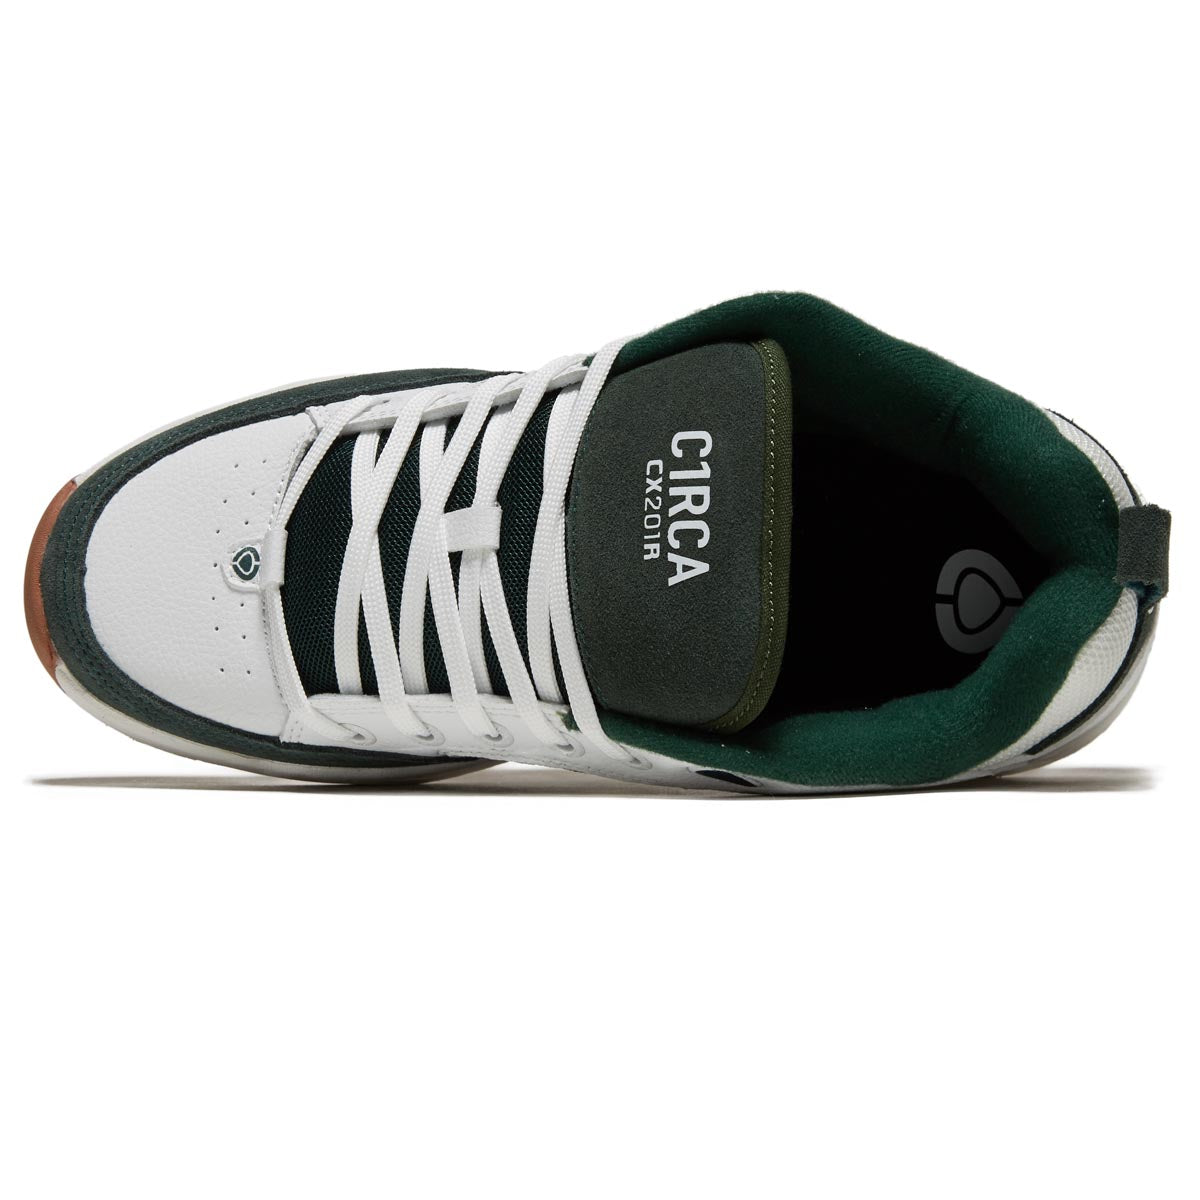 C1rca Cx201r Shoes - White/Gate Green image 3